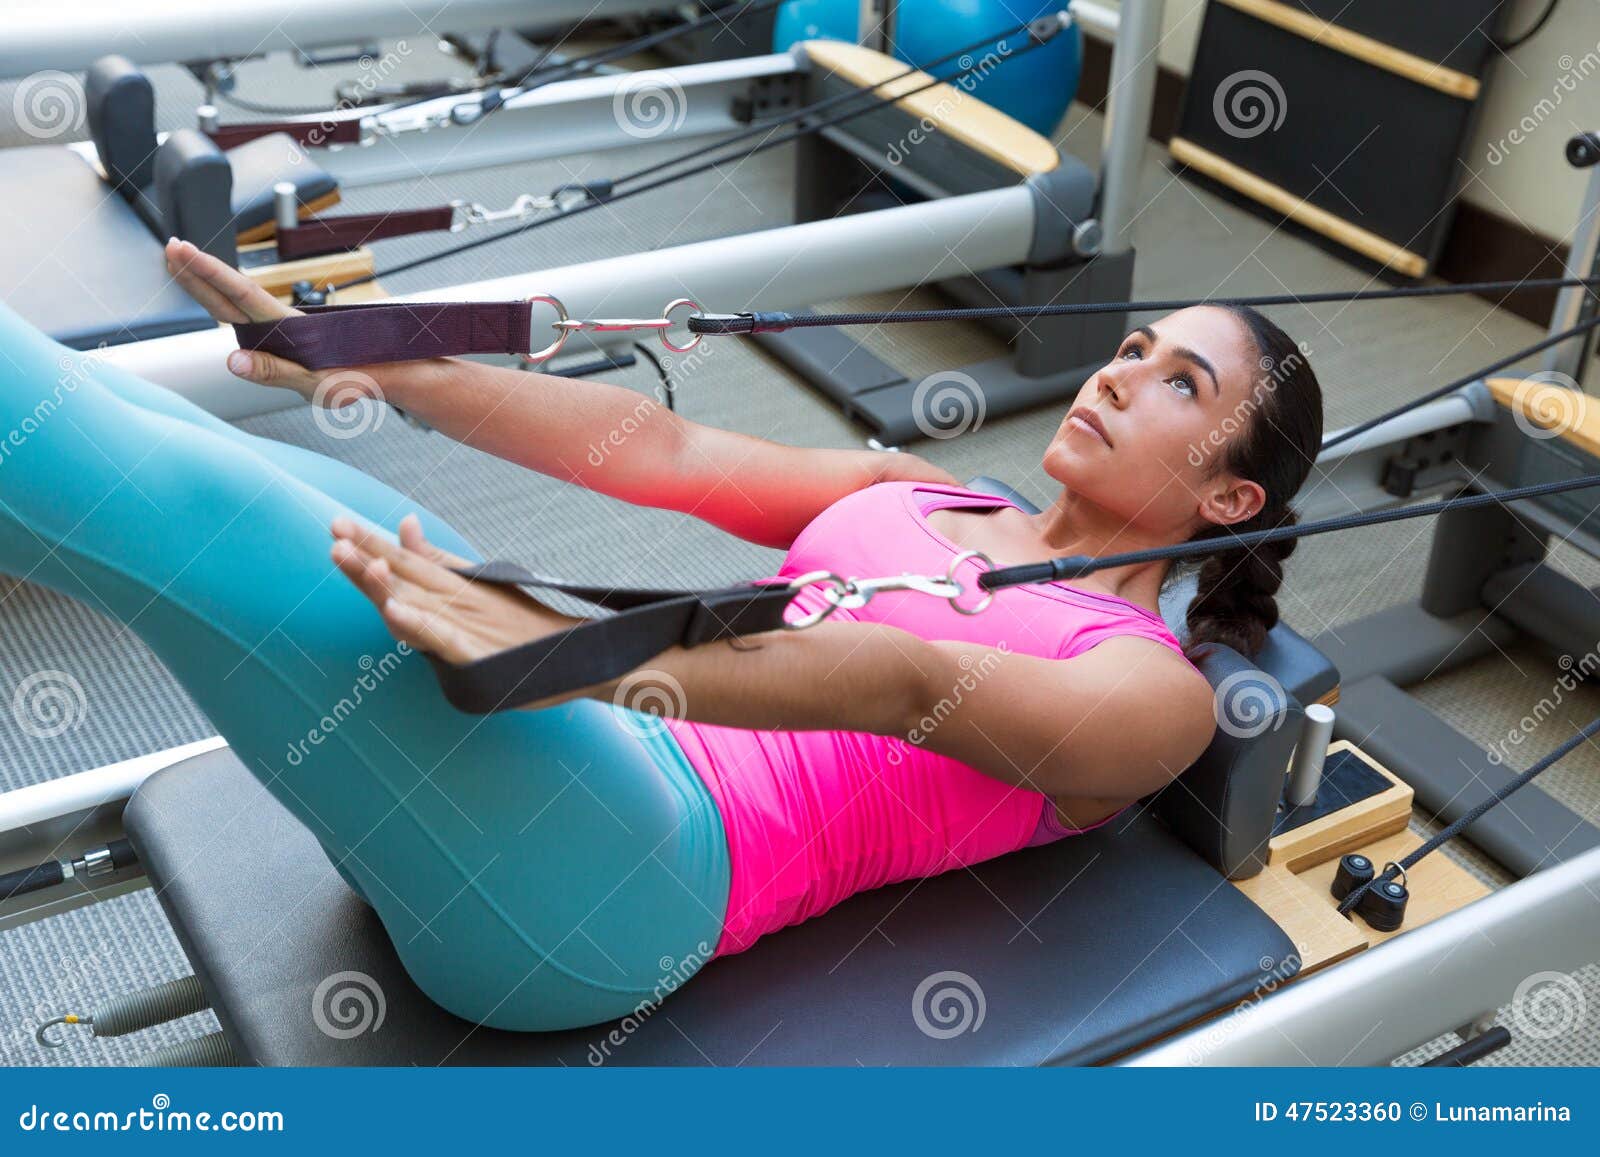 pilates reformer workout exercises woman